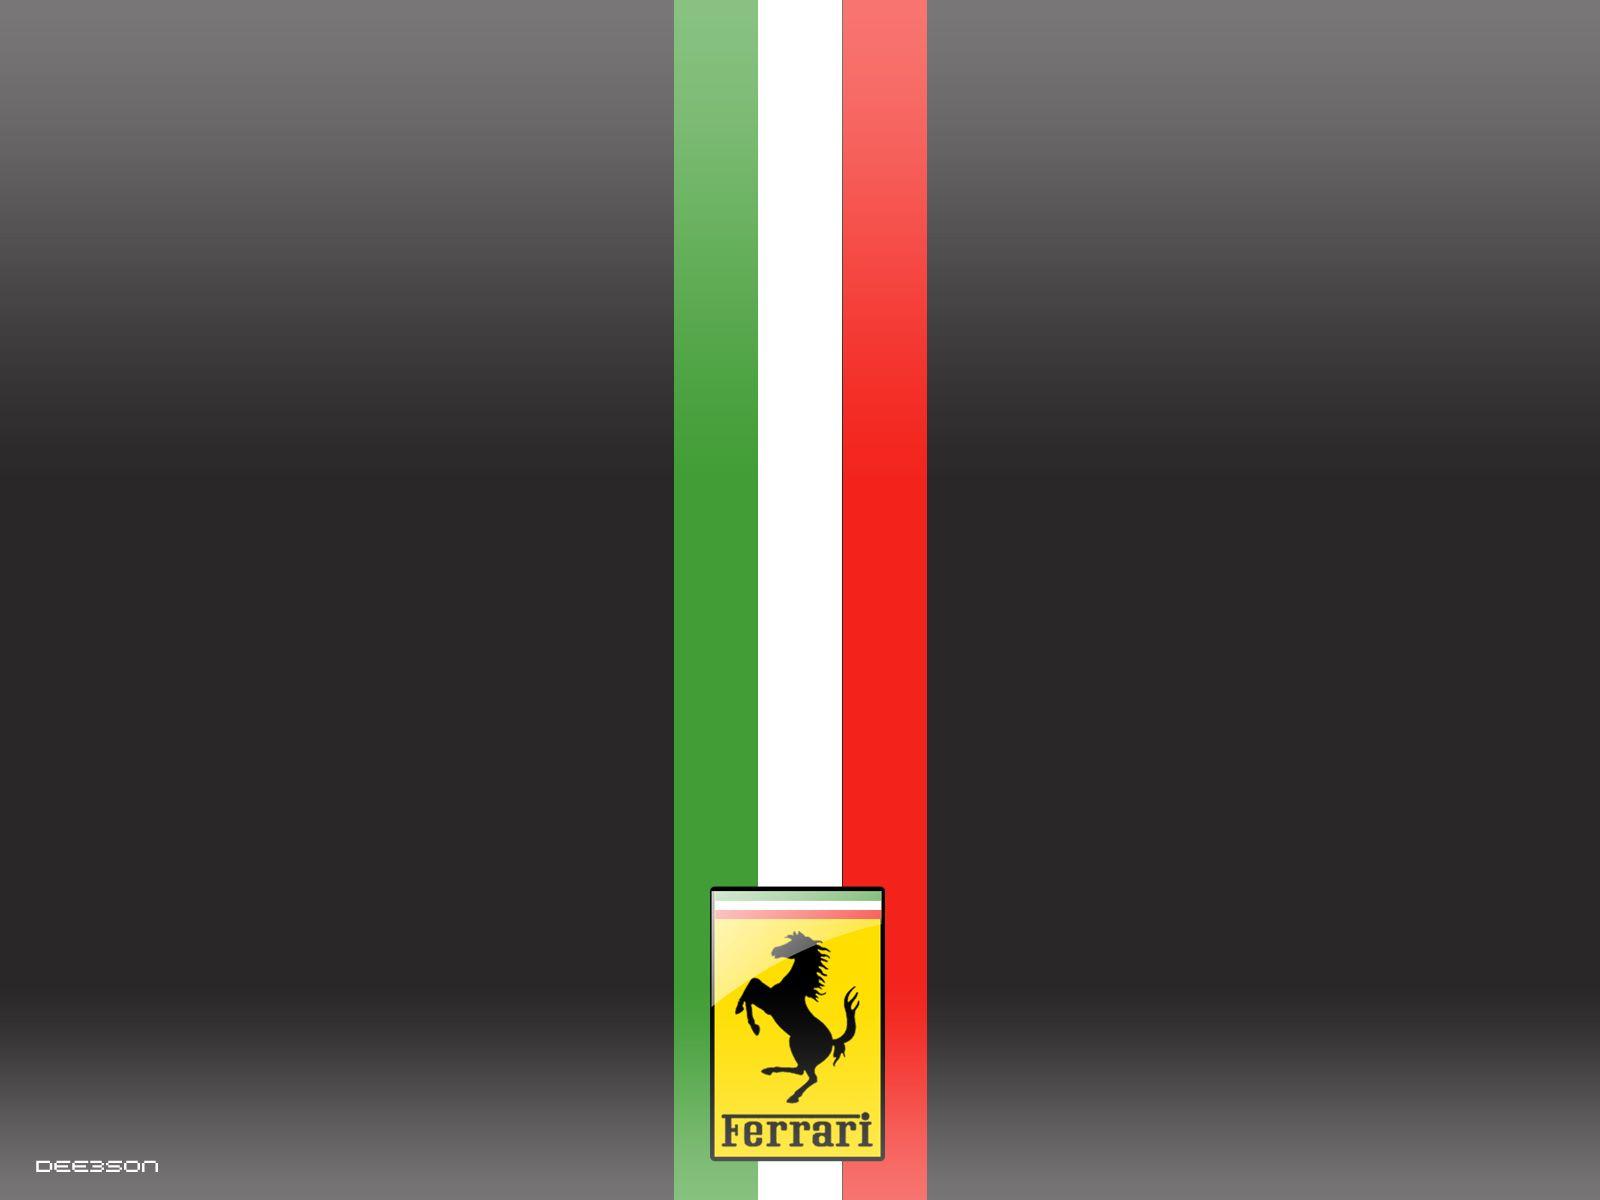 Ferrari Wallpaper